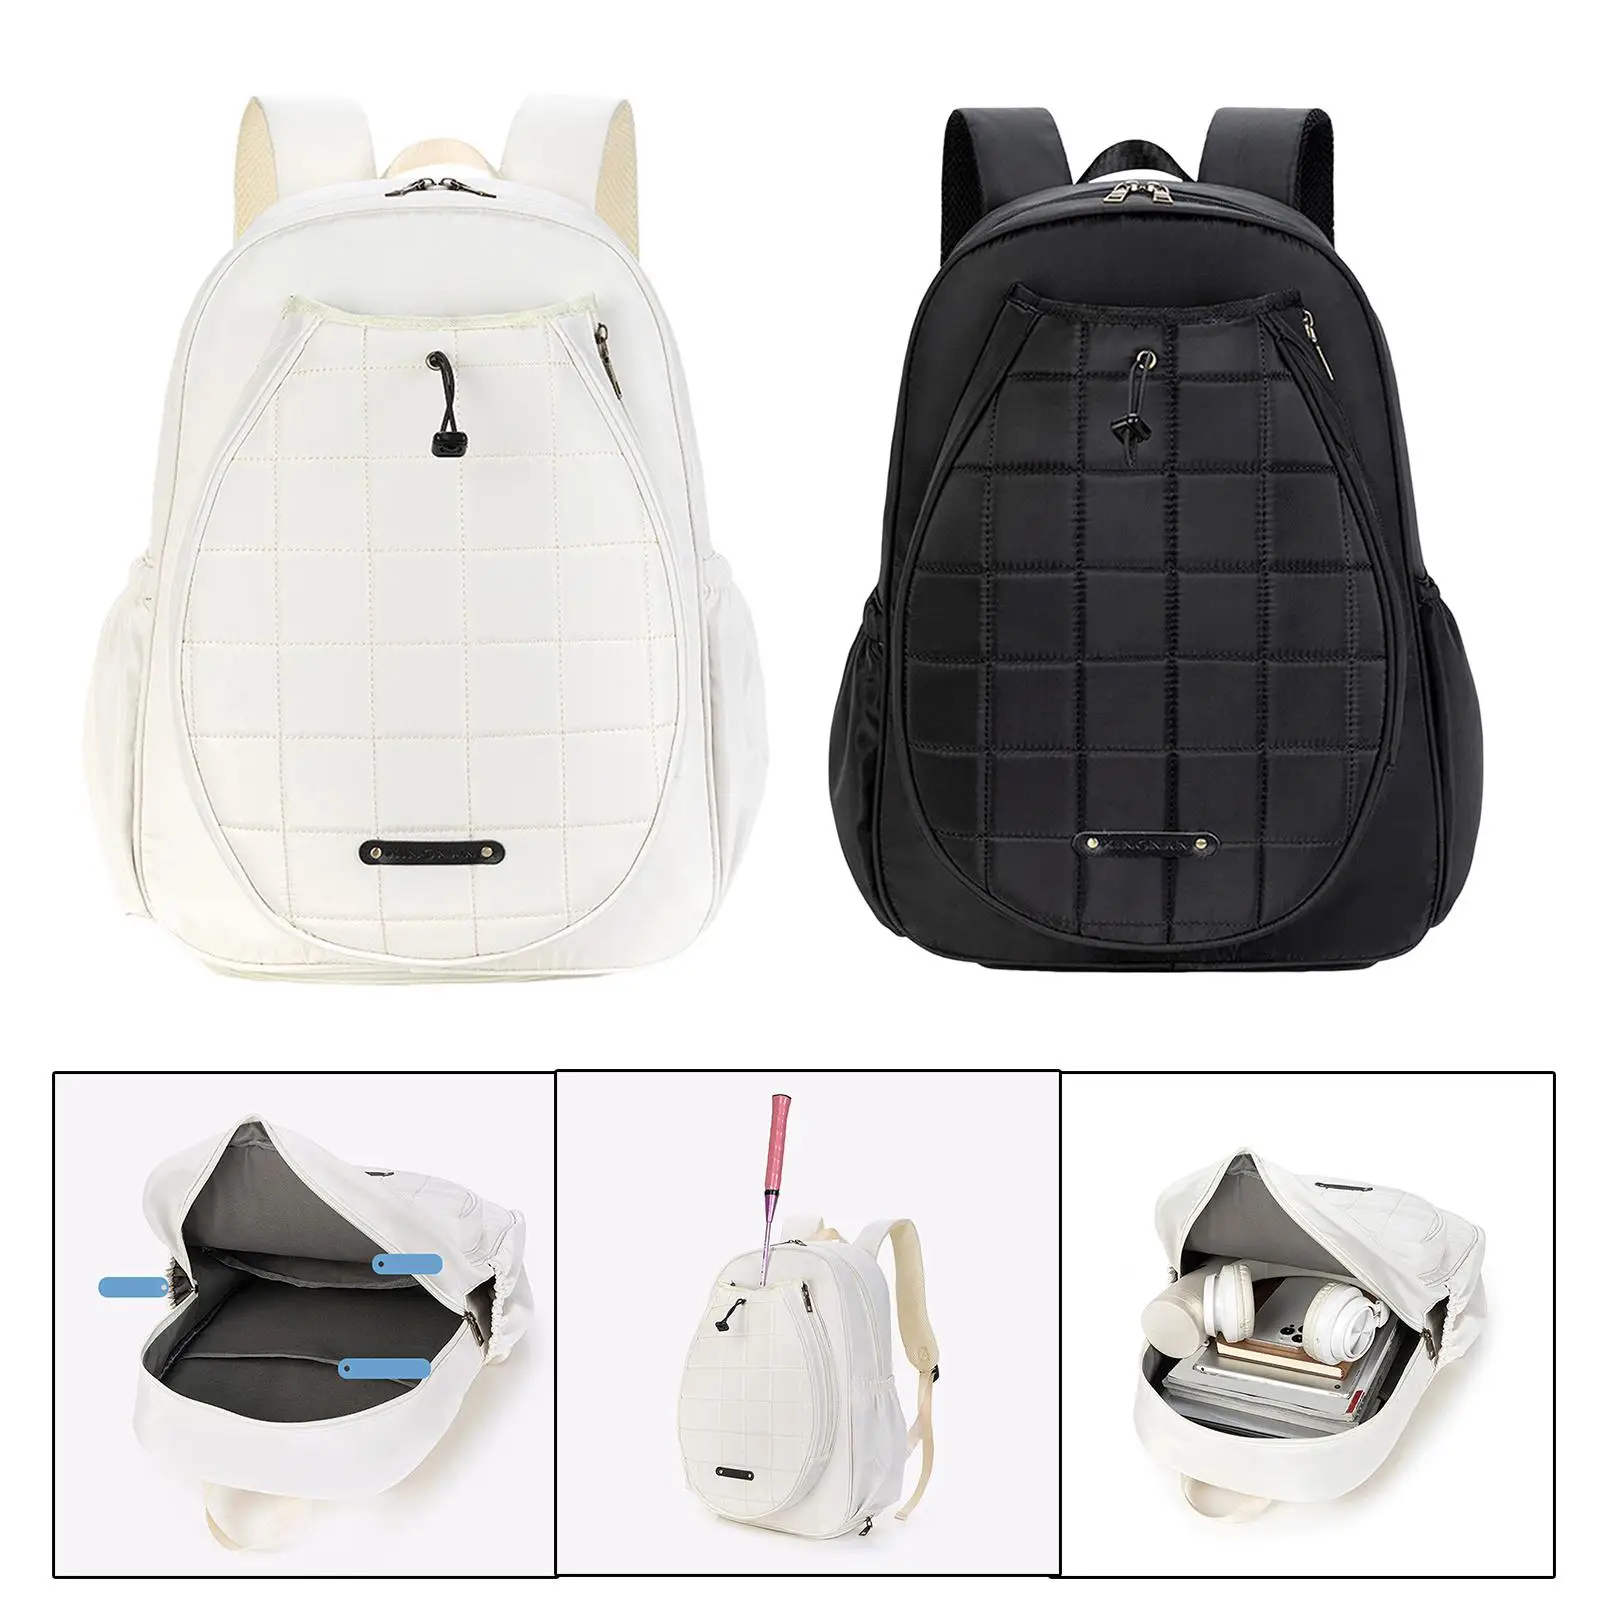 Tennis Backpack Tennis Bag Portable Tennis Racket Bag for Pickleball Paddles